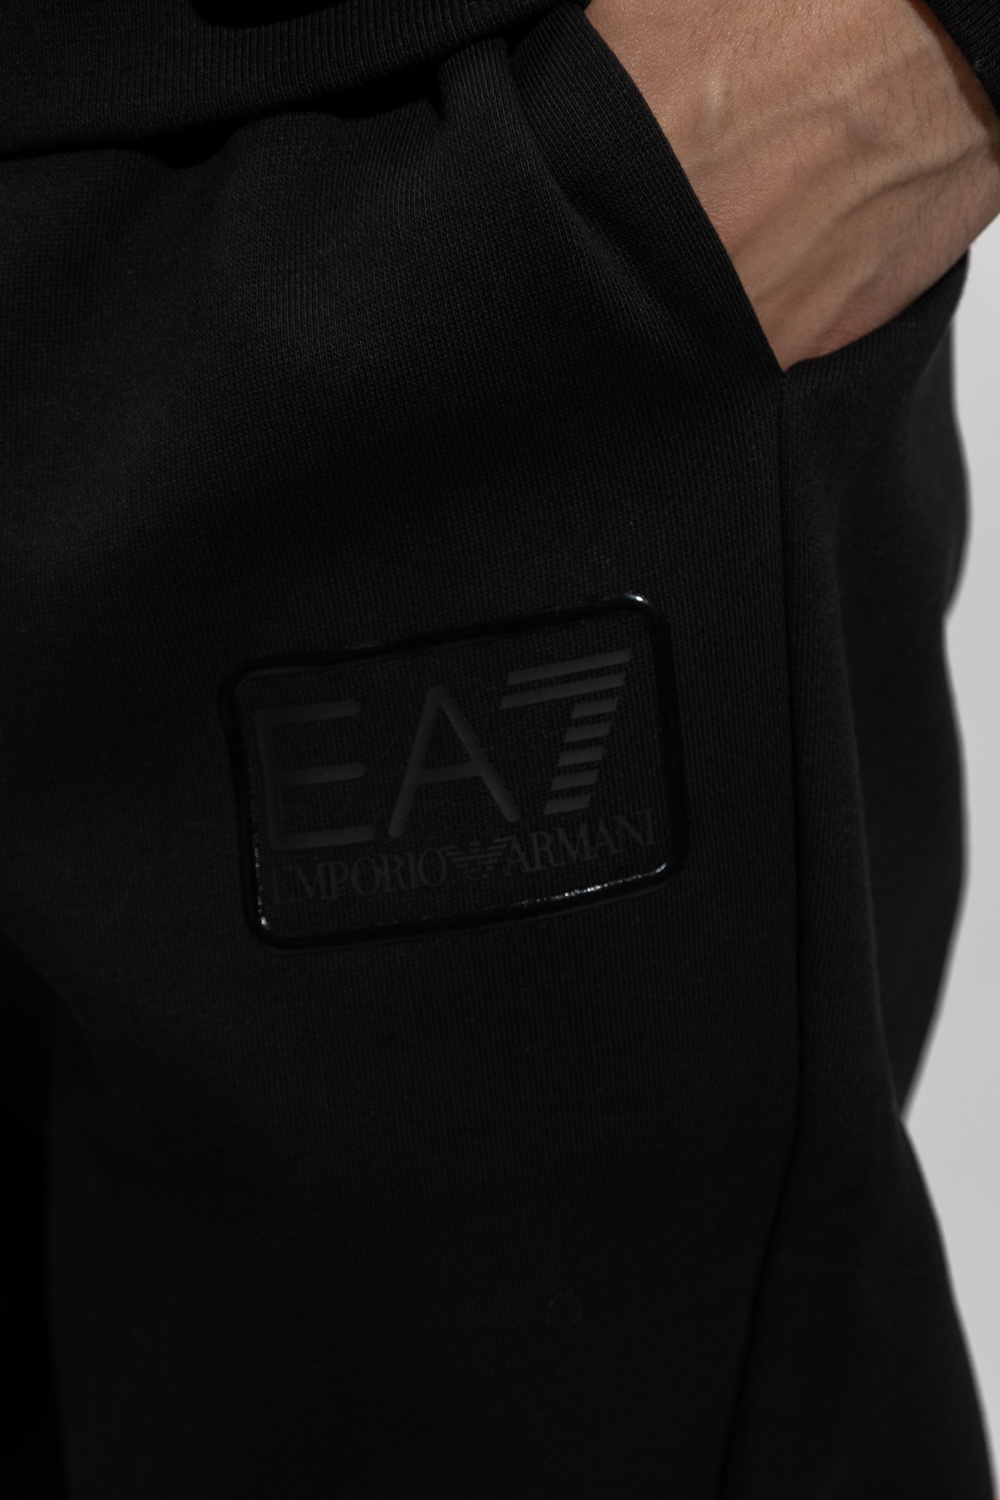 emporio AR2500 armani logo print canvas tote bag item Sweatshirt & sweatpants set